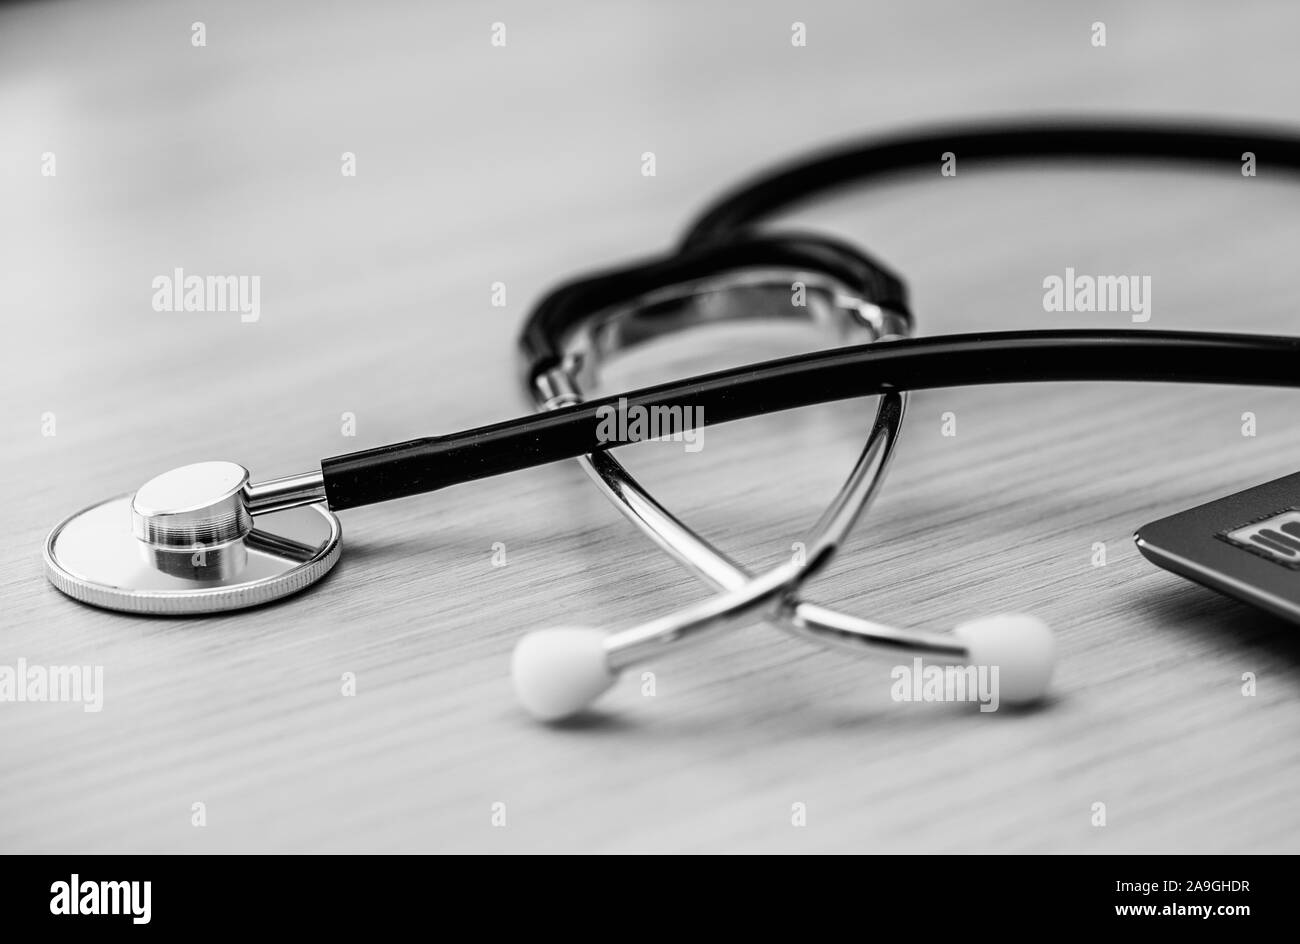 Macro black stethoscope on the table, close up view. Horizontal, black and white image Stock Photo